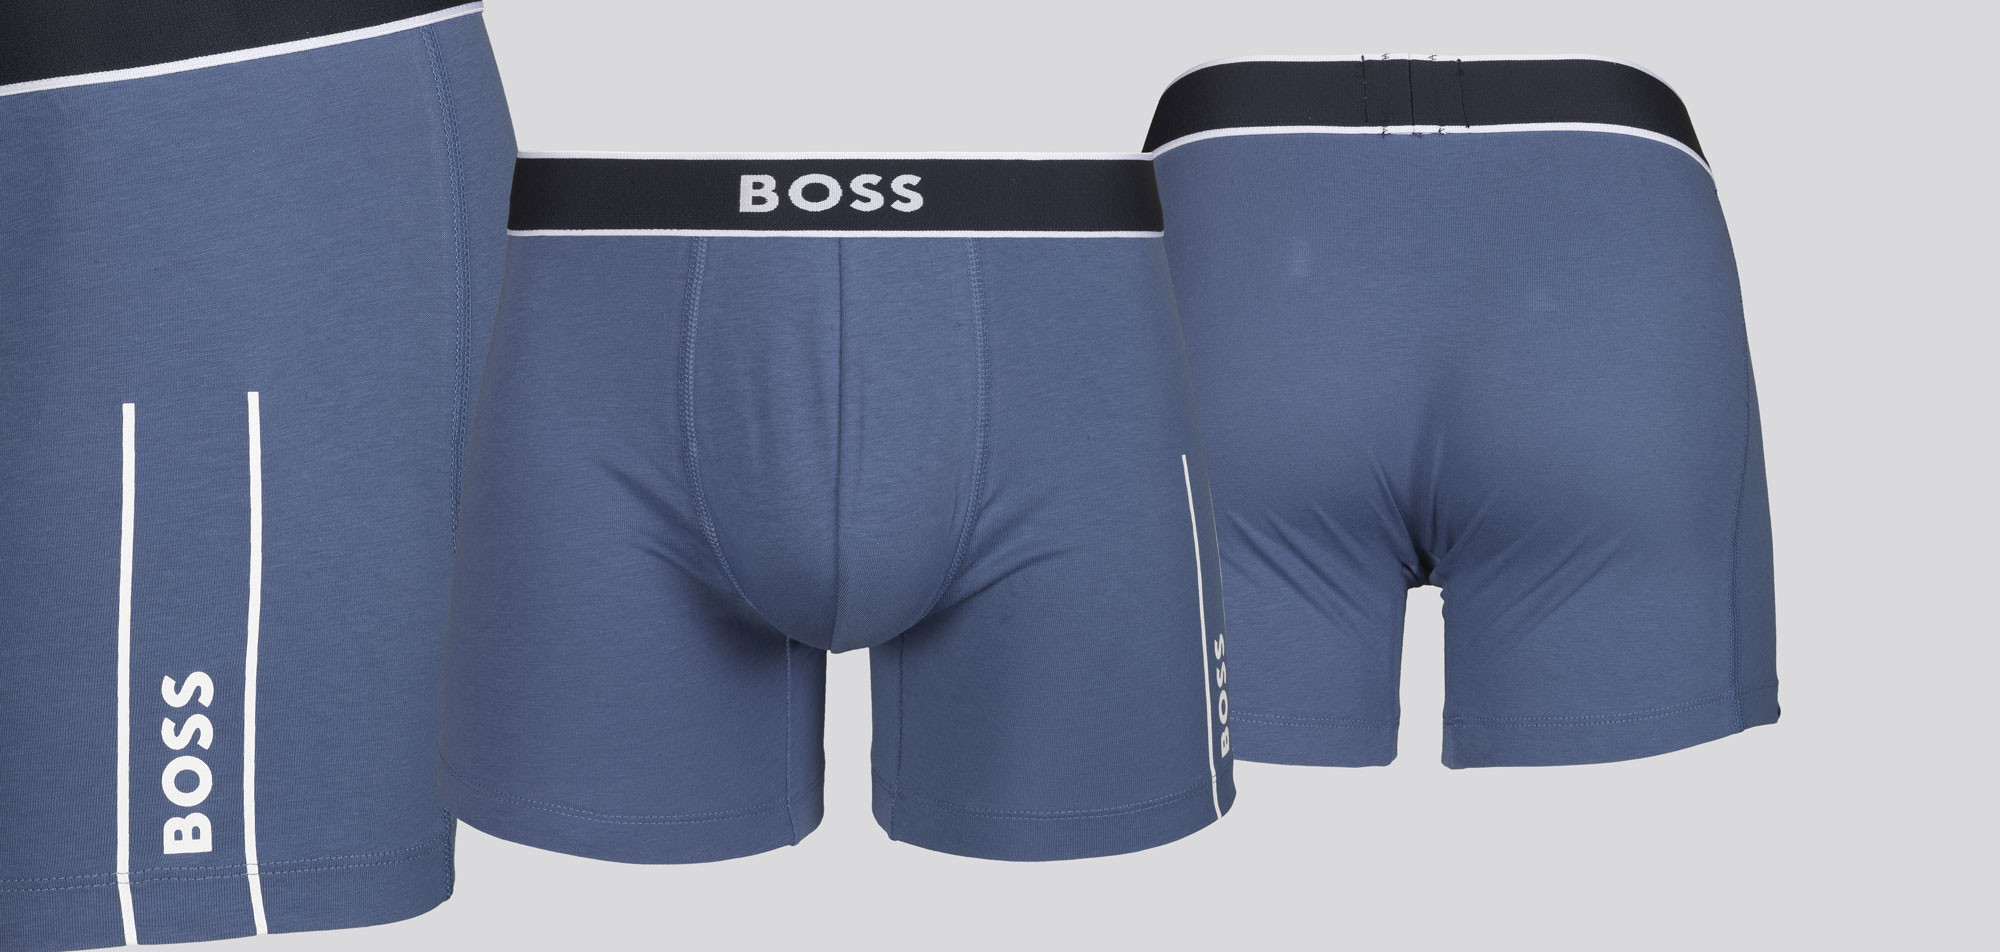 Boss Boxer Brief 761 24 Logo, color Nee